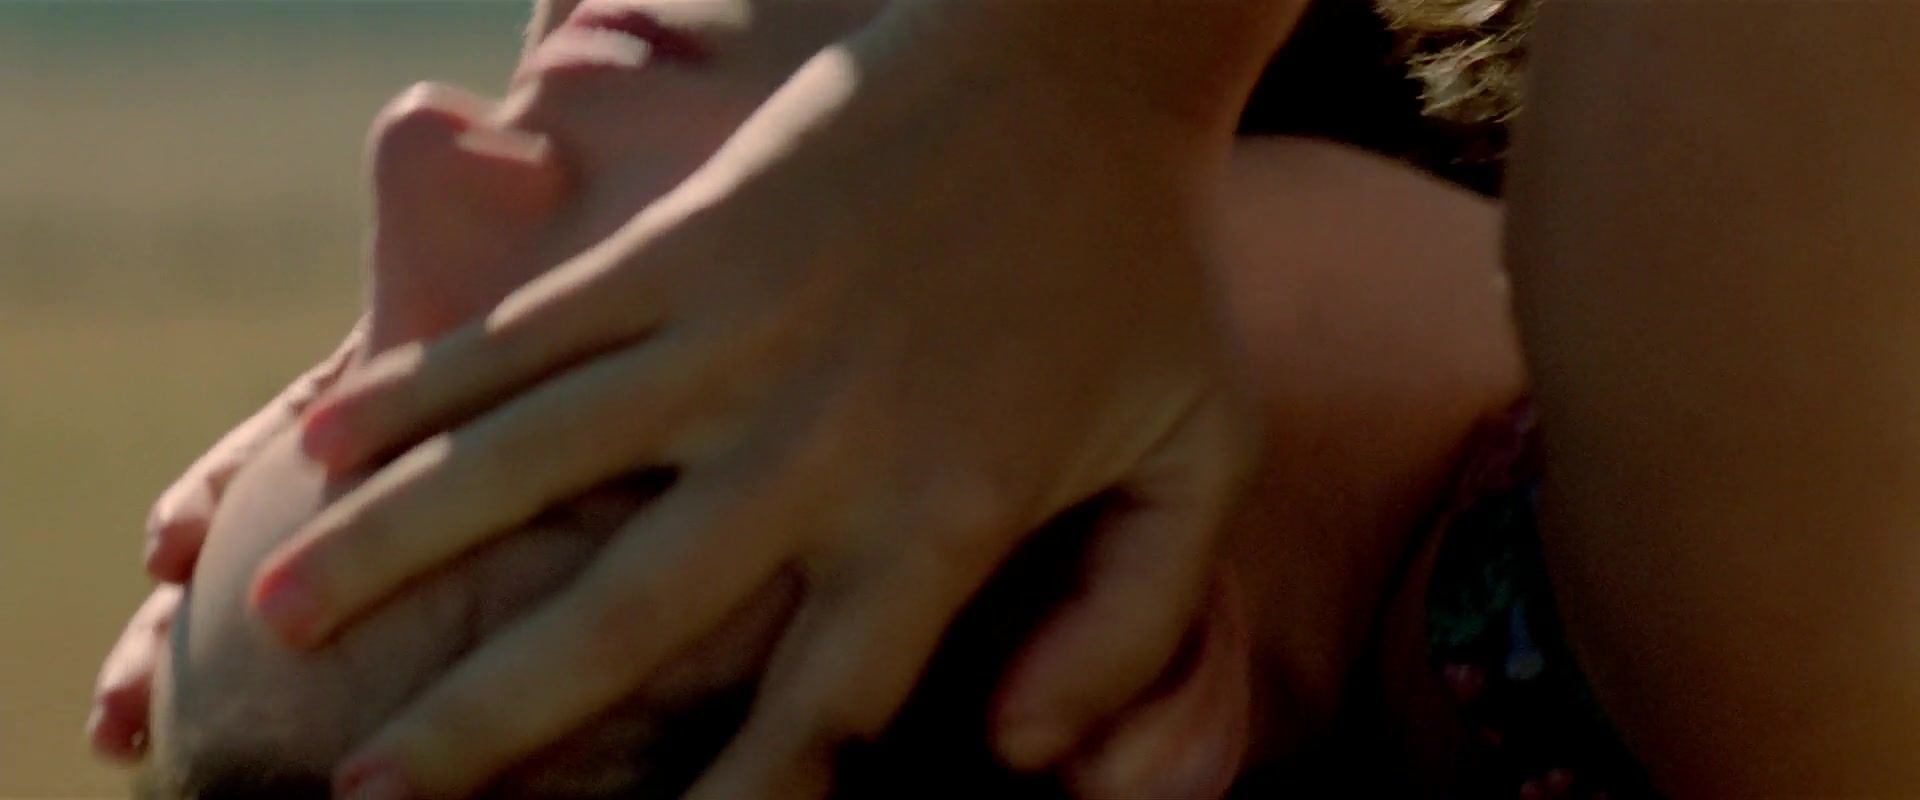 EuroSexParties Hot Scene with actress Madeleine Stowe | The movie "Revenge" Gay Smoking - 1